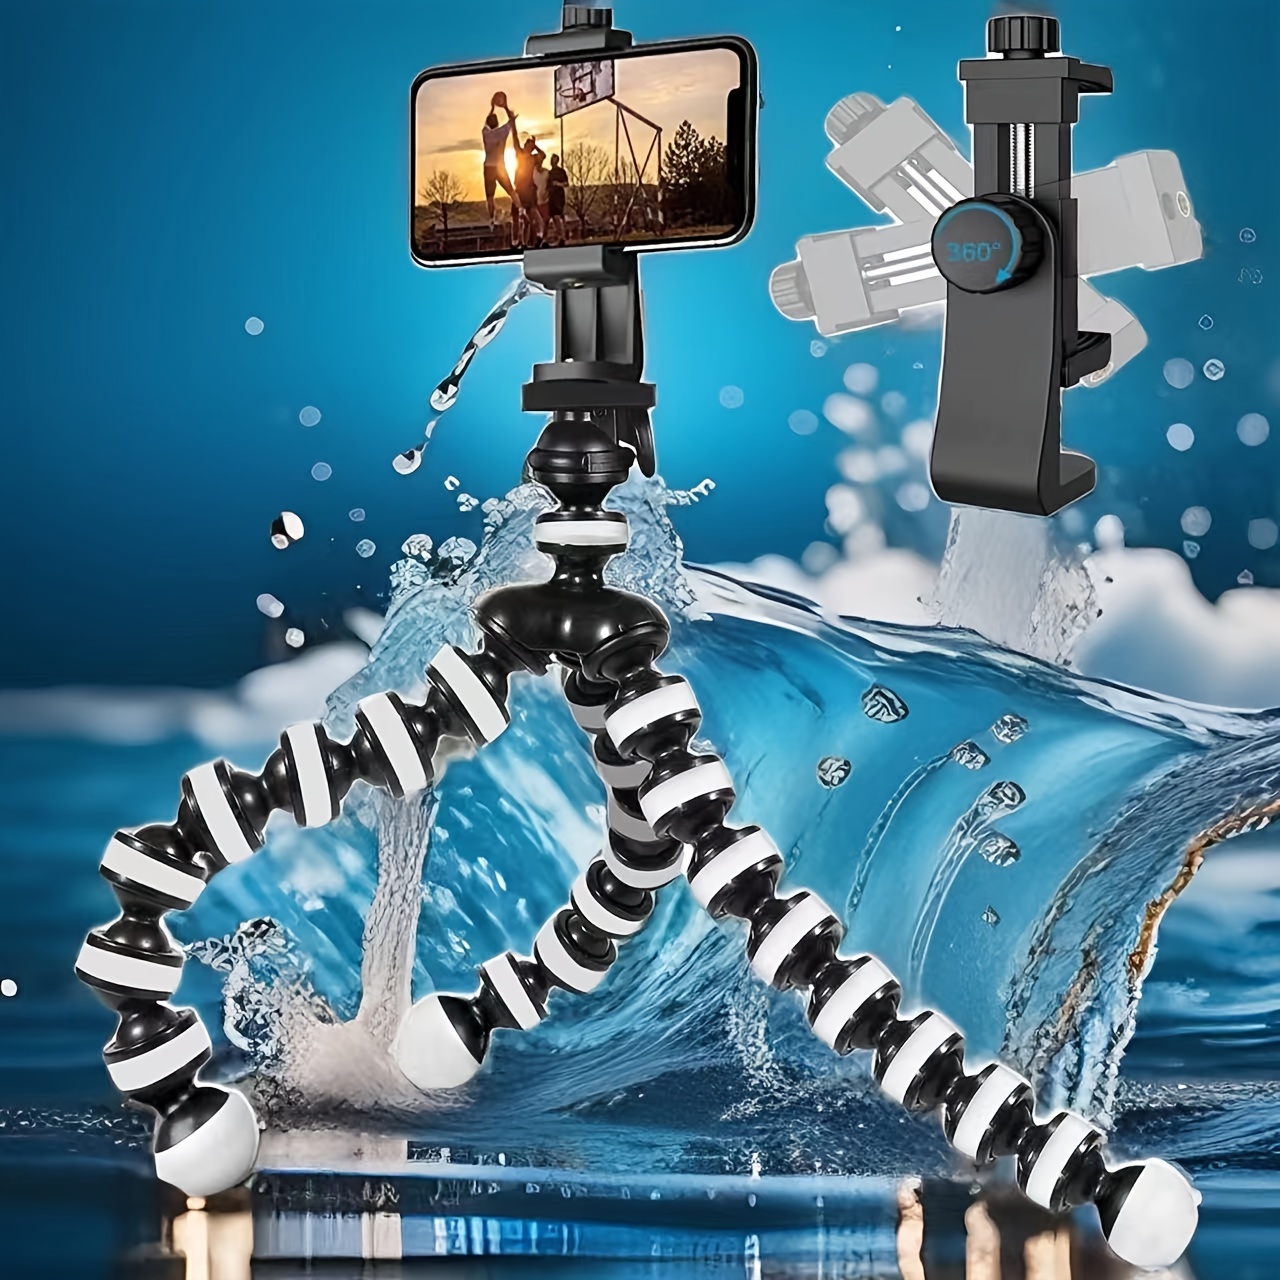 Trepied GoPro pieuvre + adapteur + support smartphone